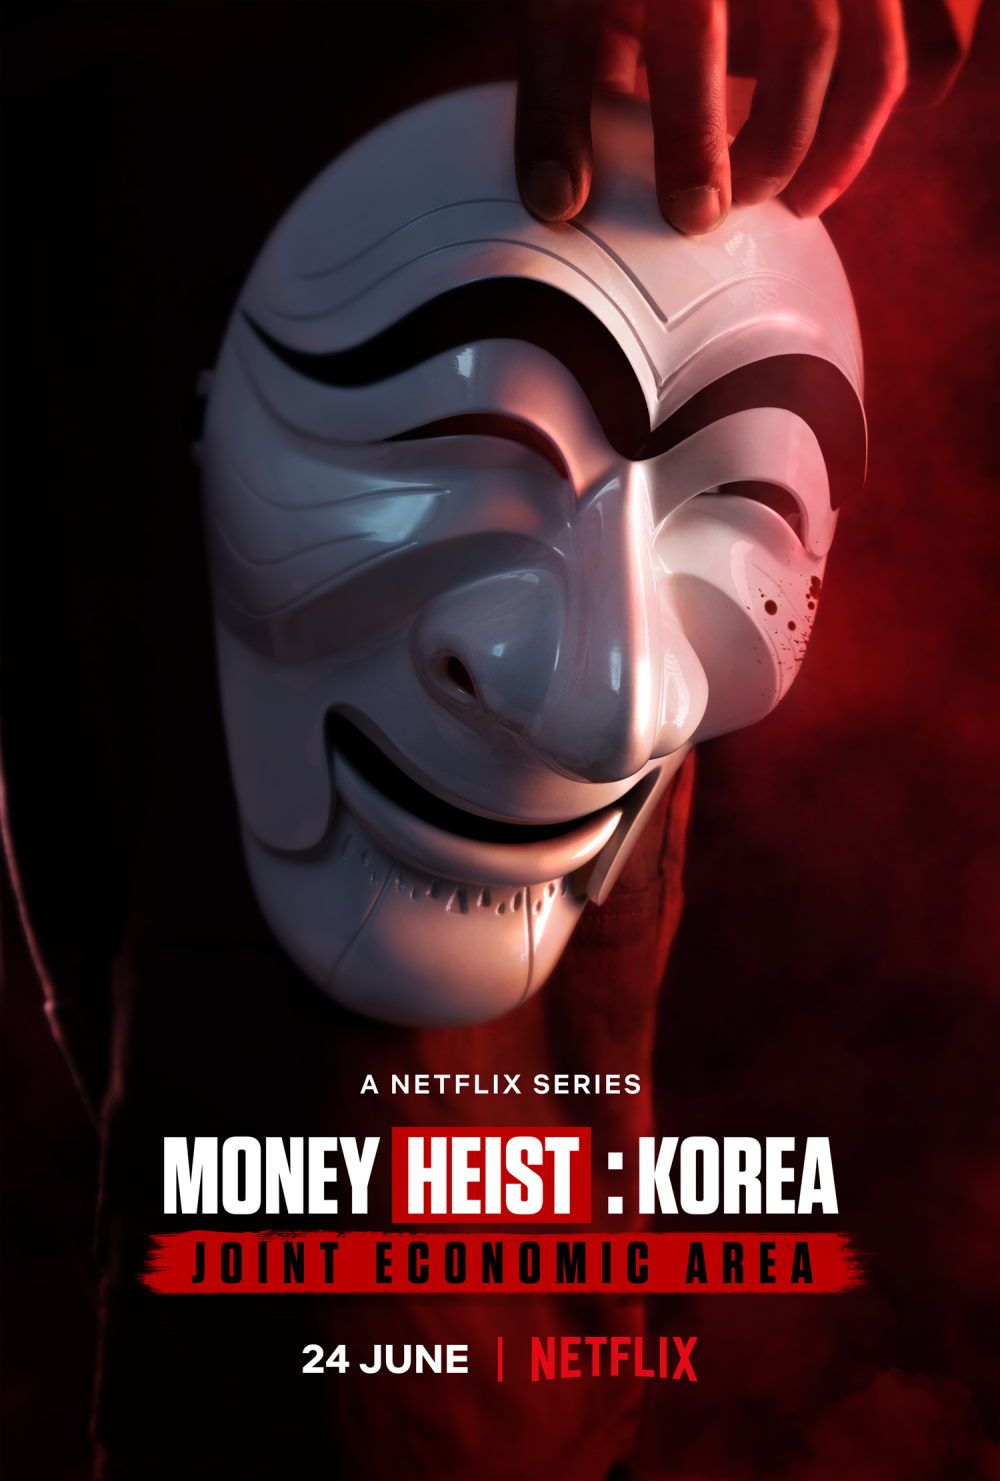 Money Heist: Korea to premiere on Netflix on 24 June